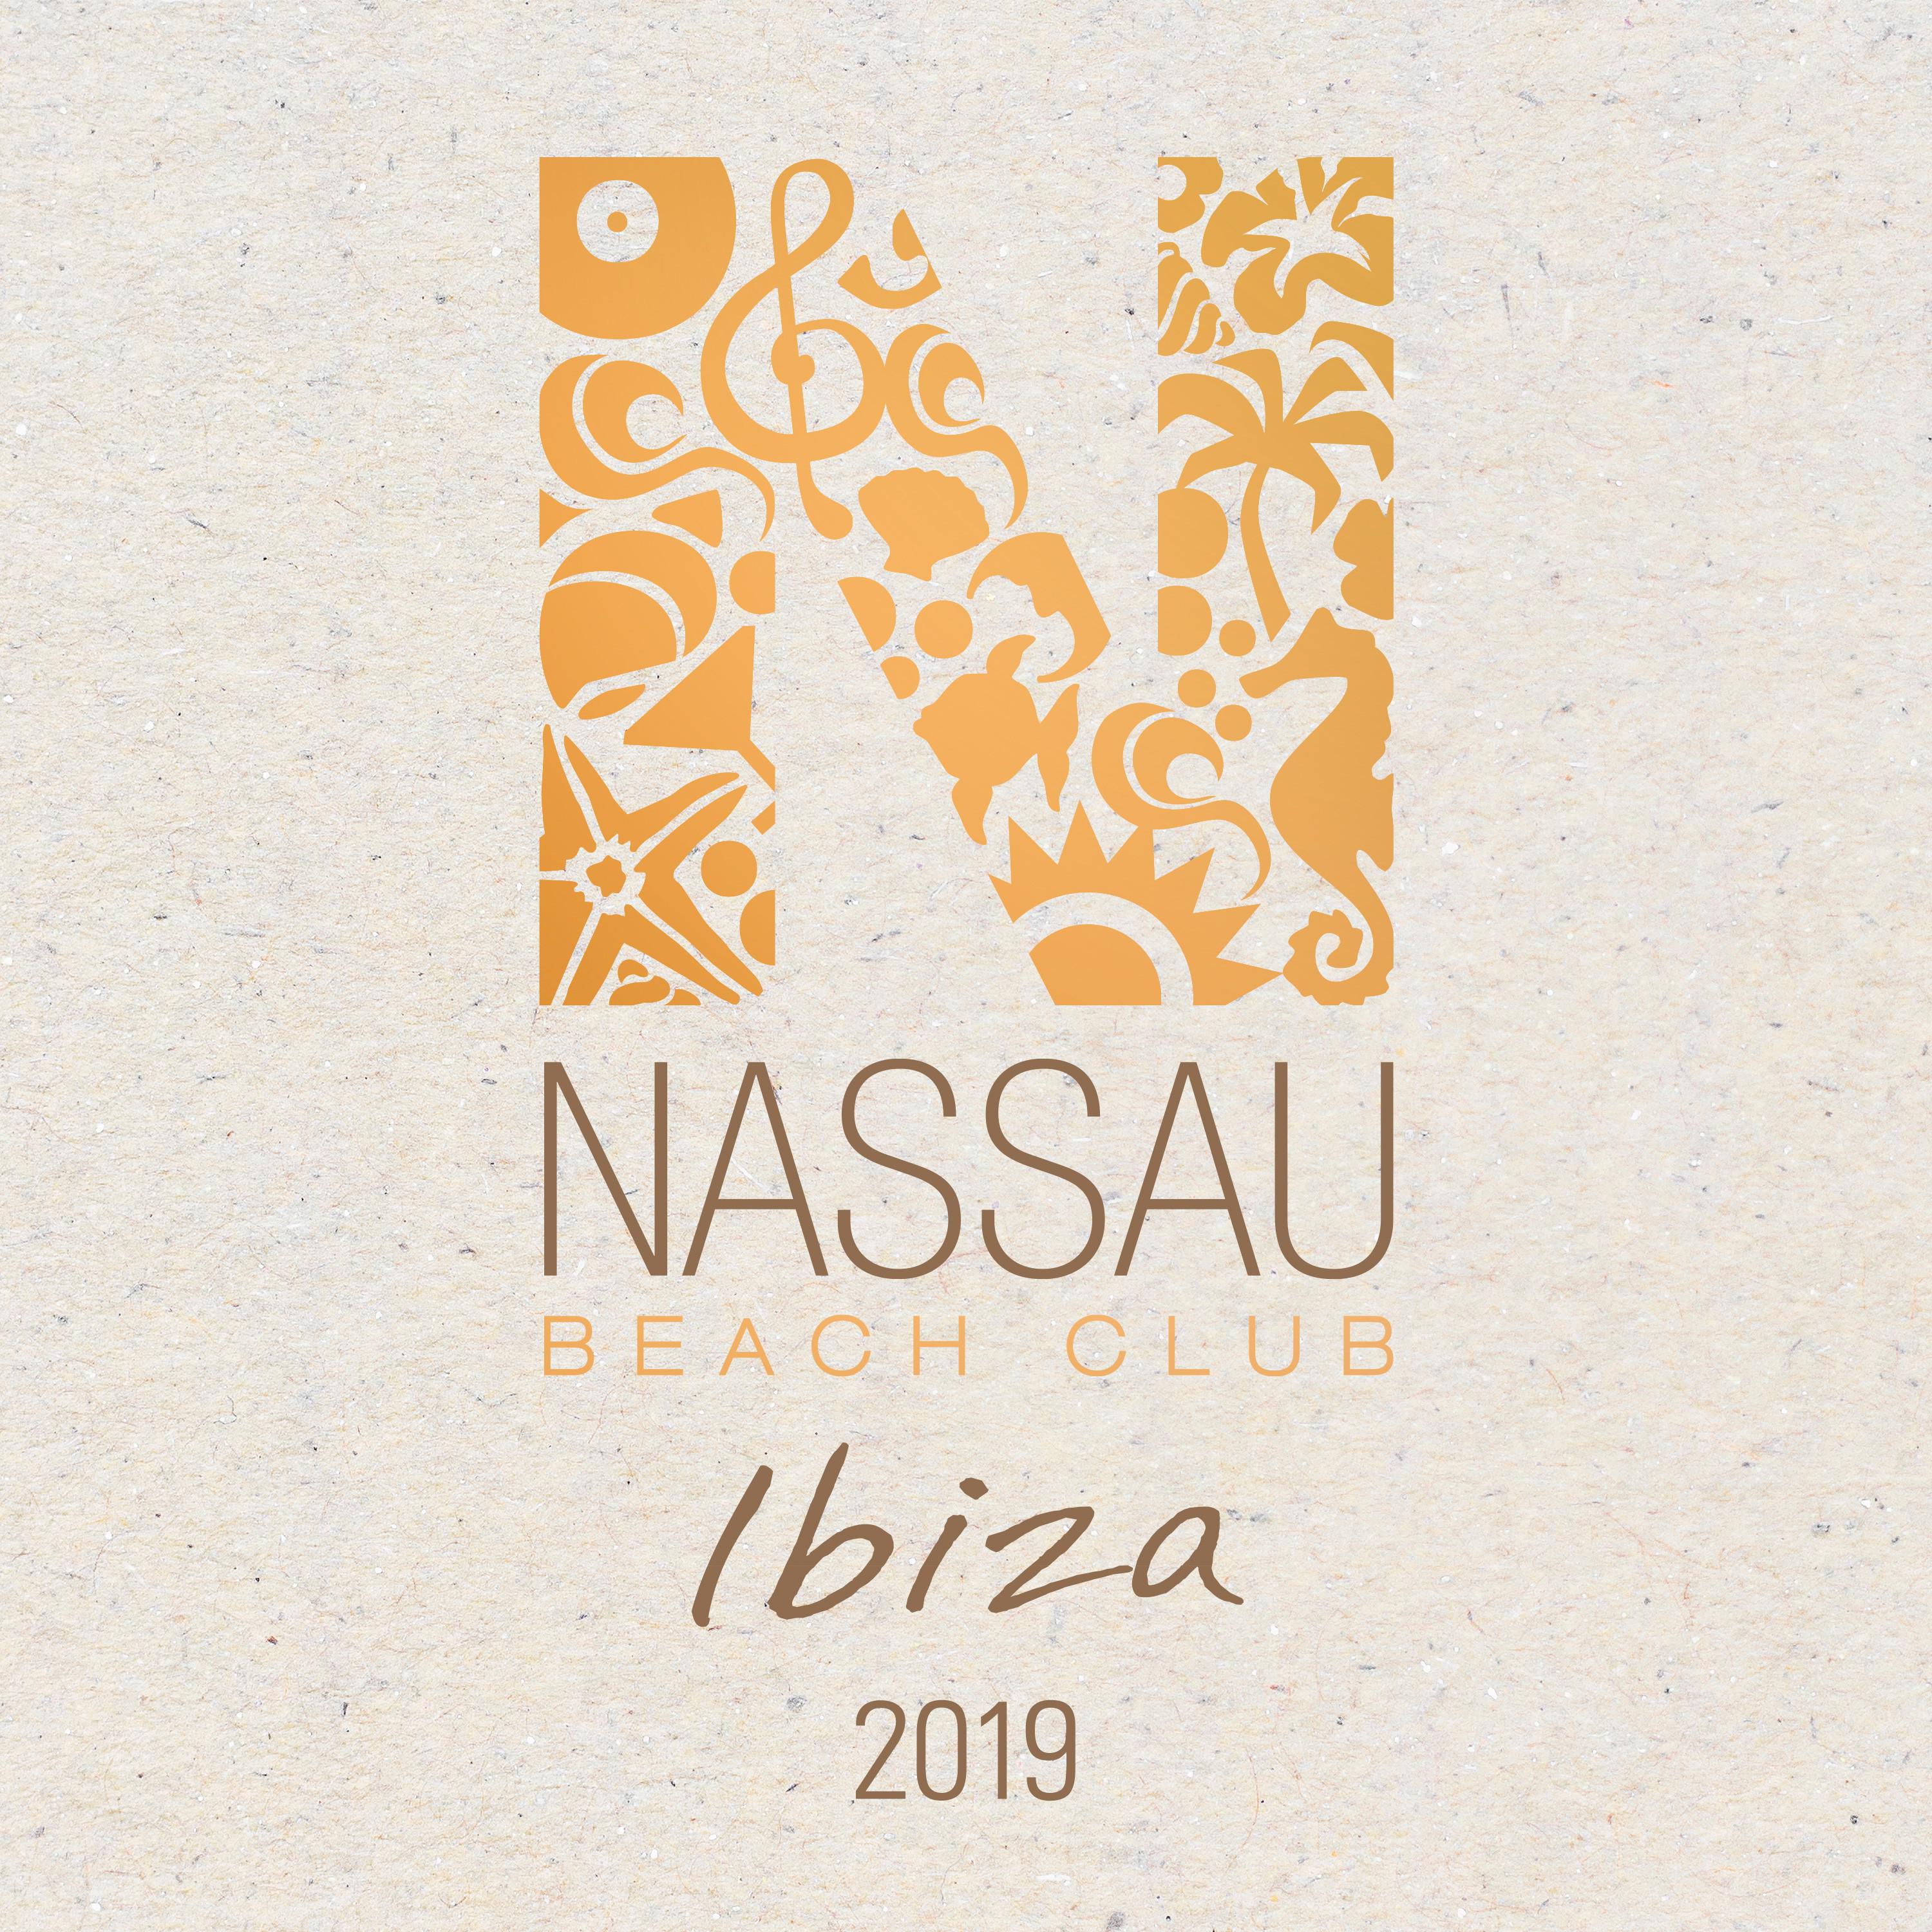 Nassau Beach Club 2019 Mix by David Crops